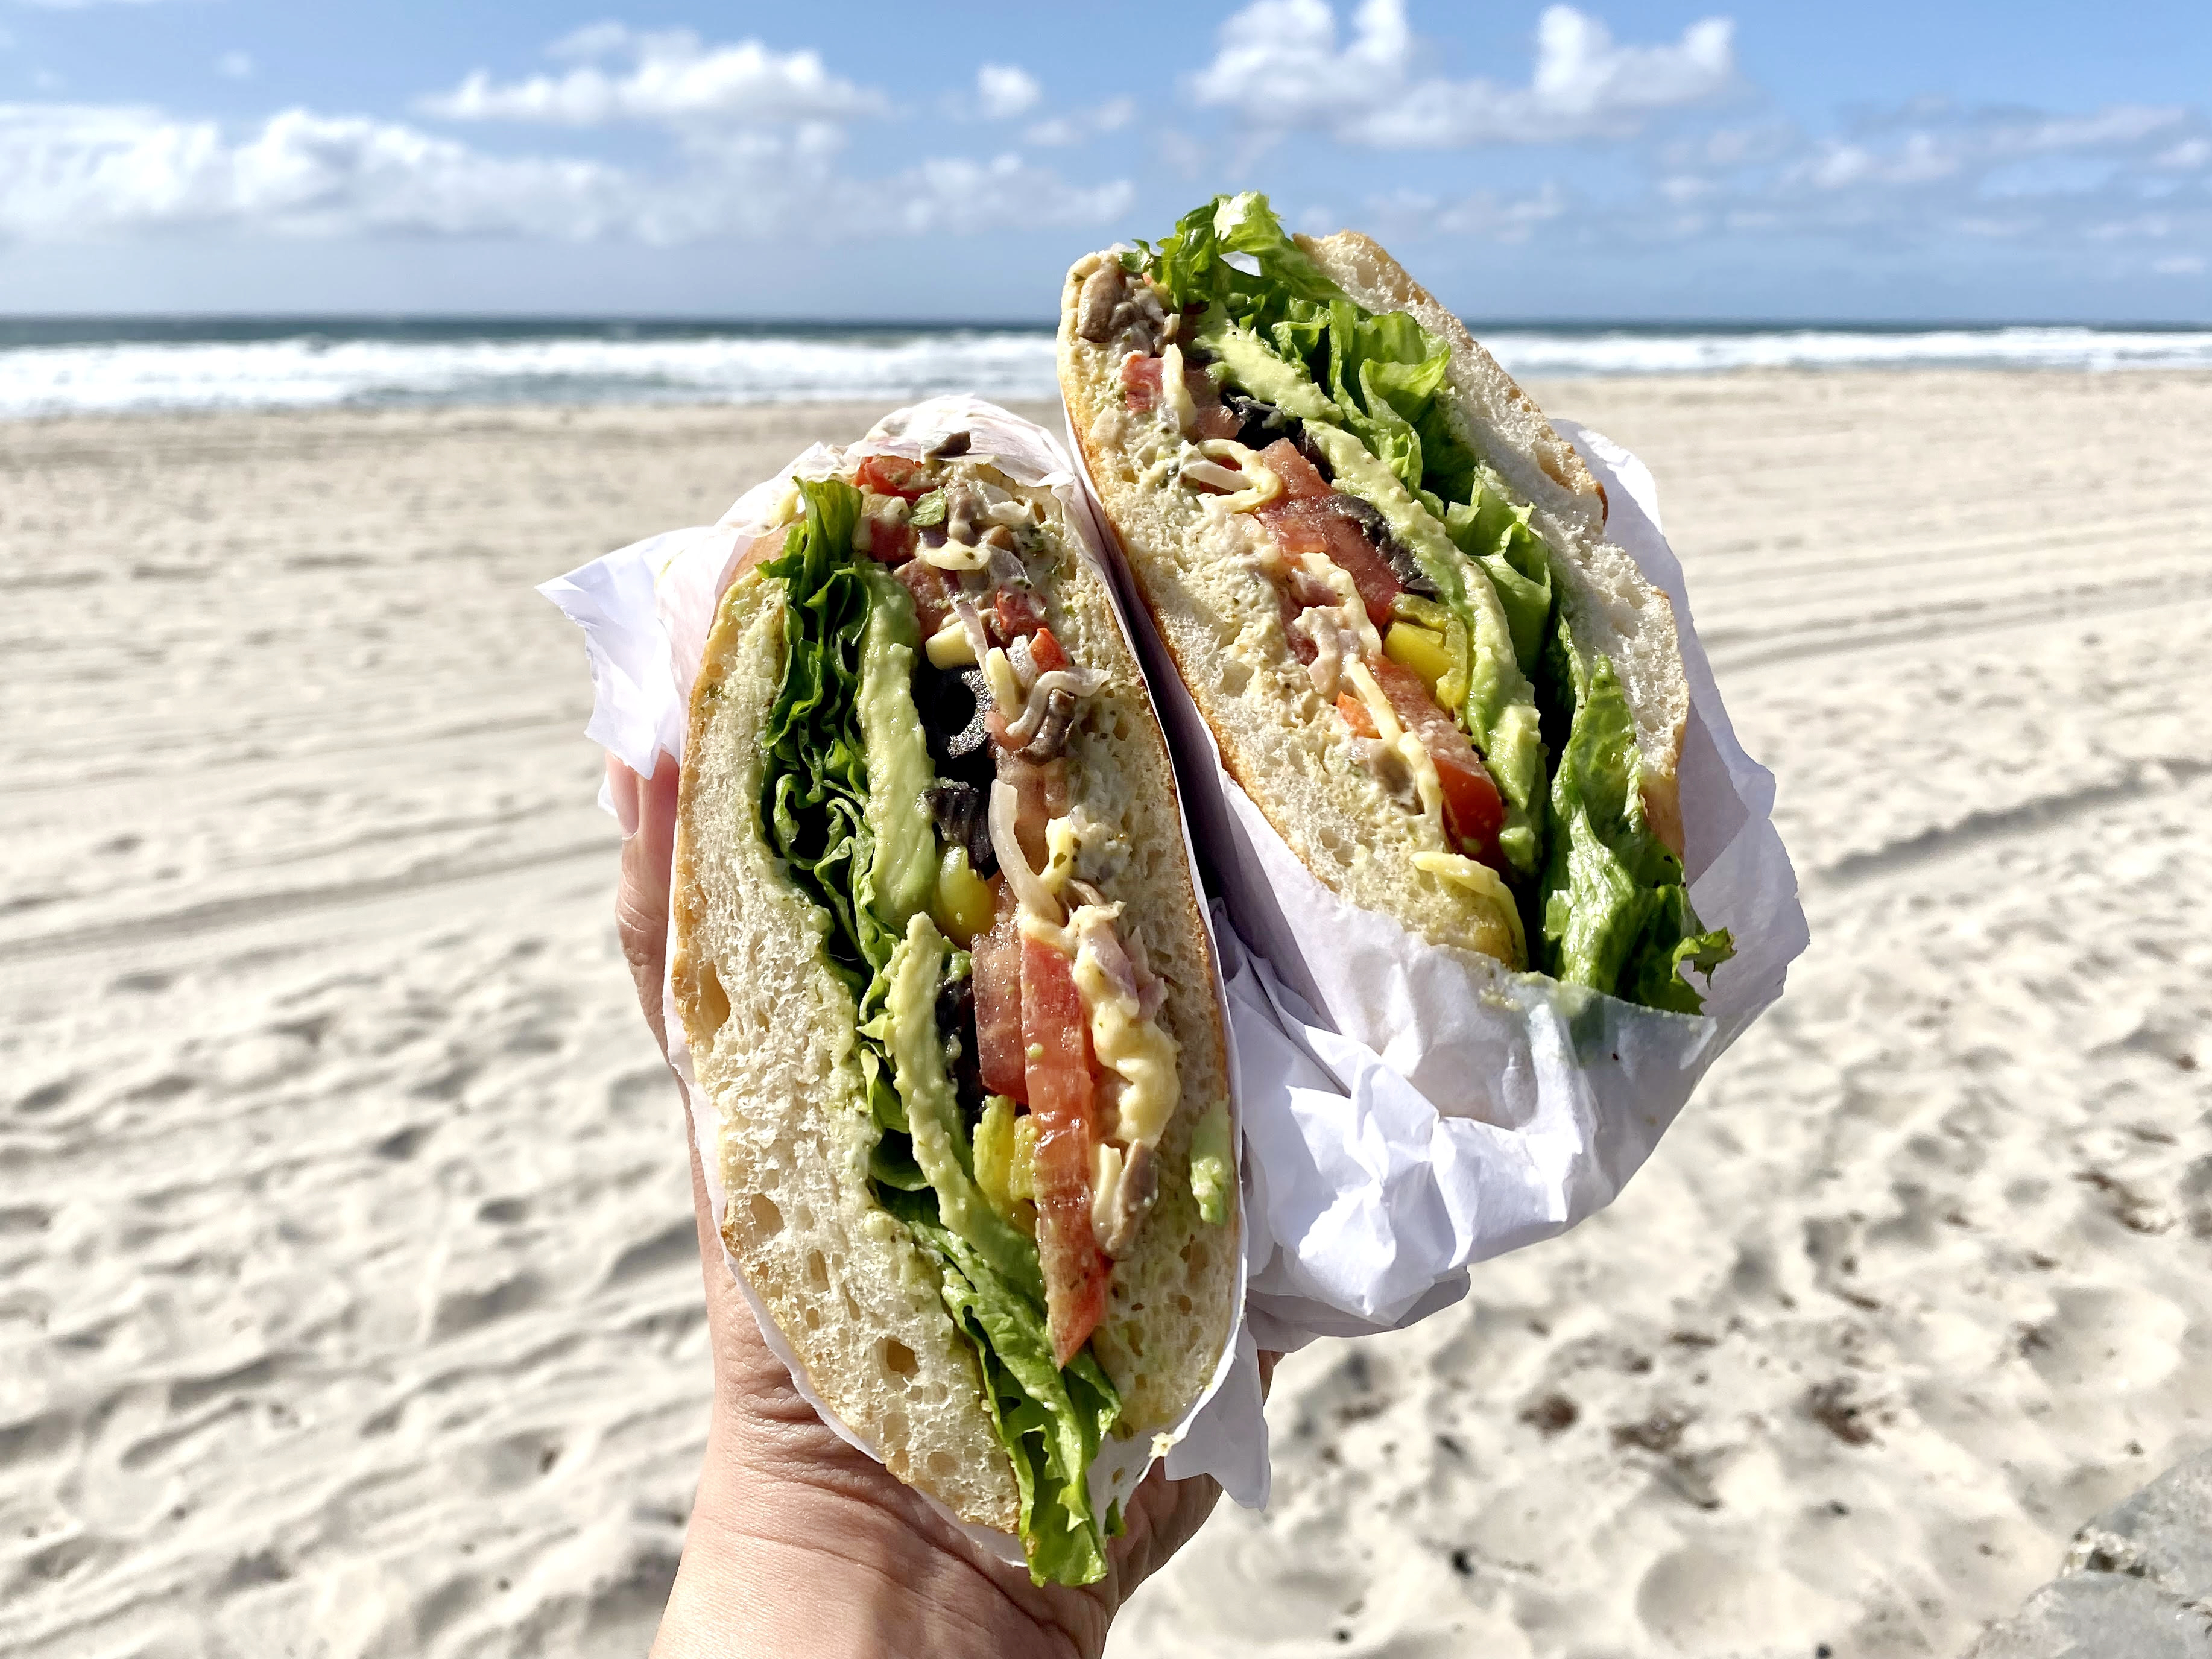 Mushroom sandwich against beach background.